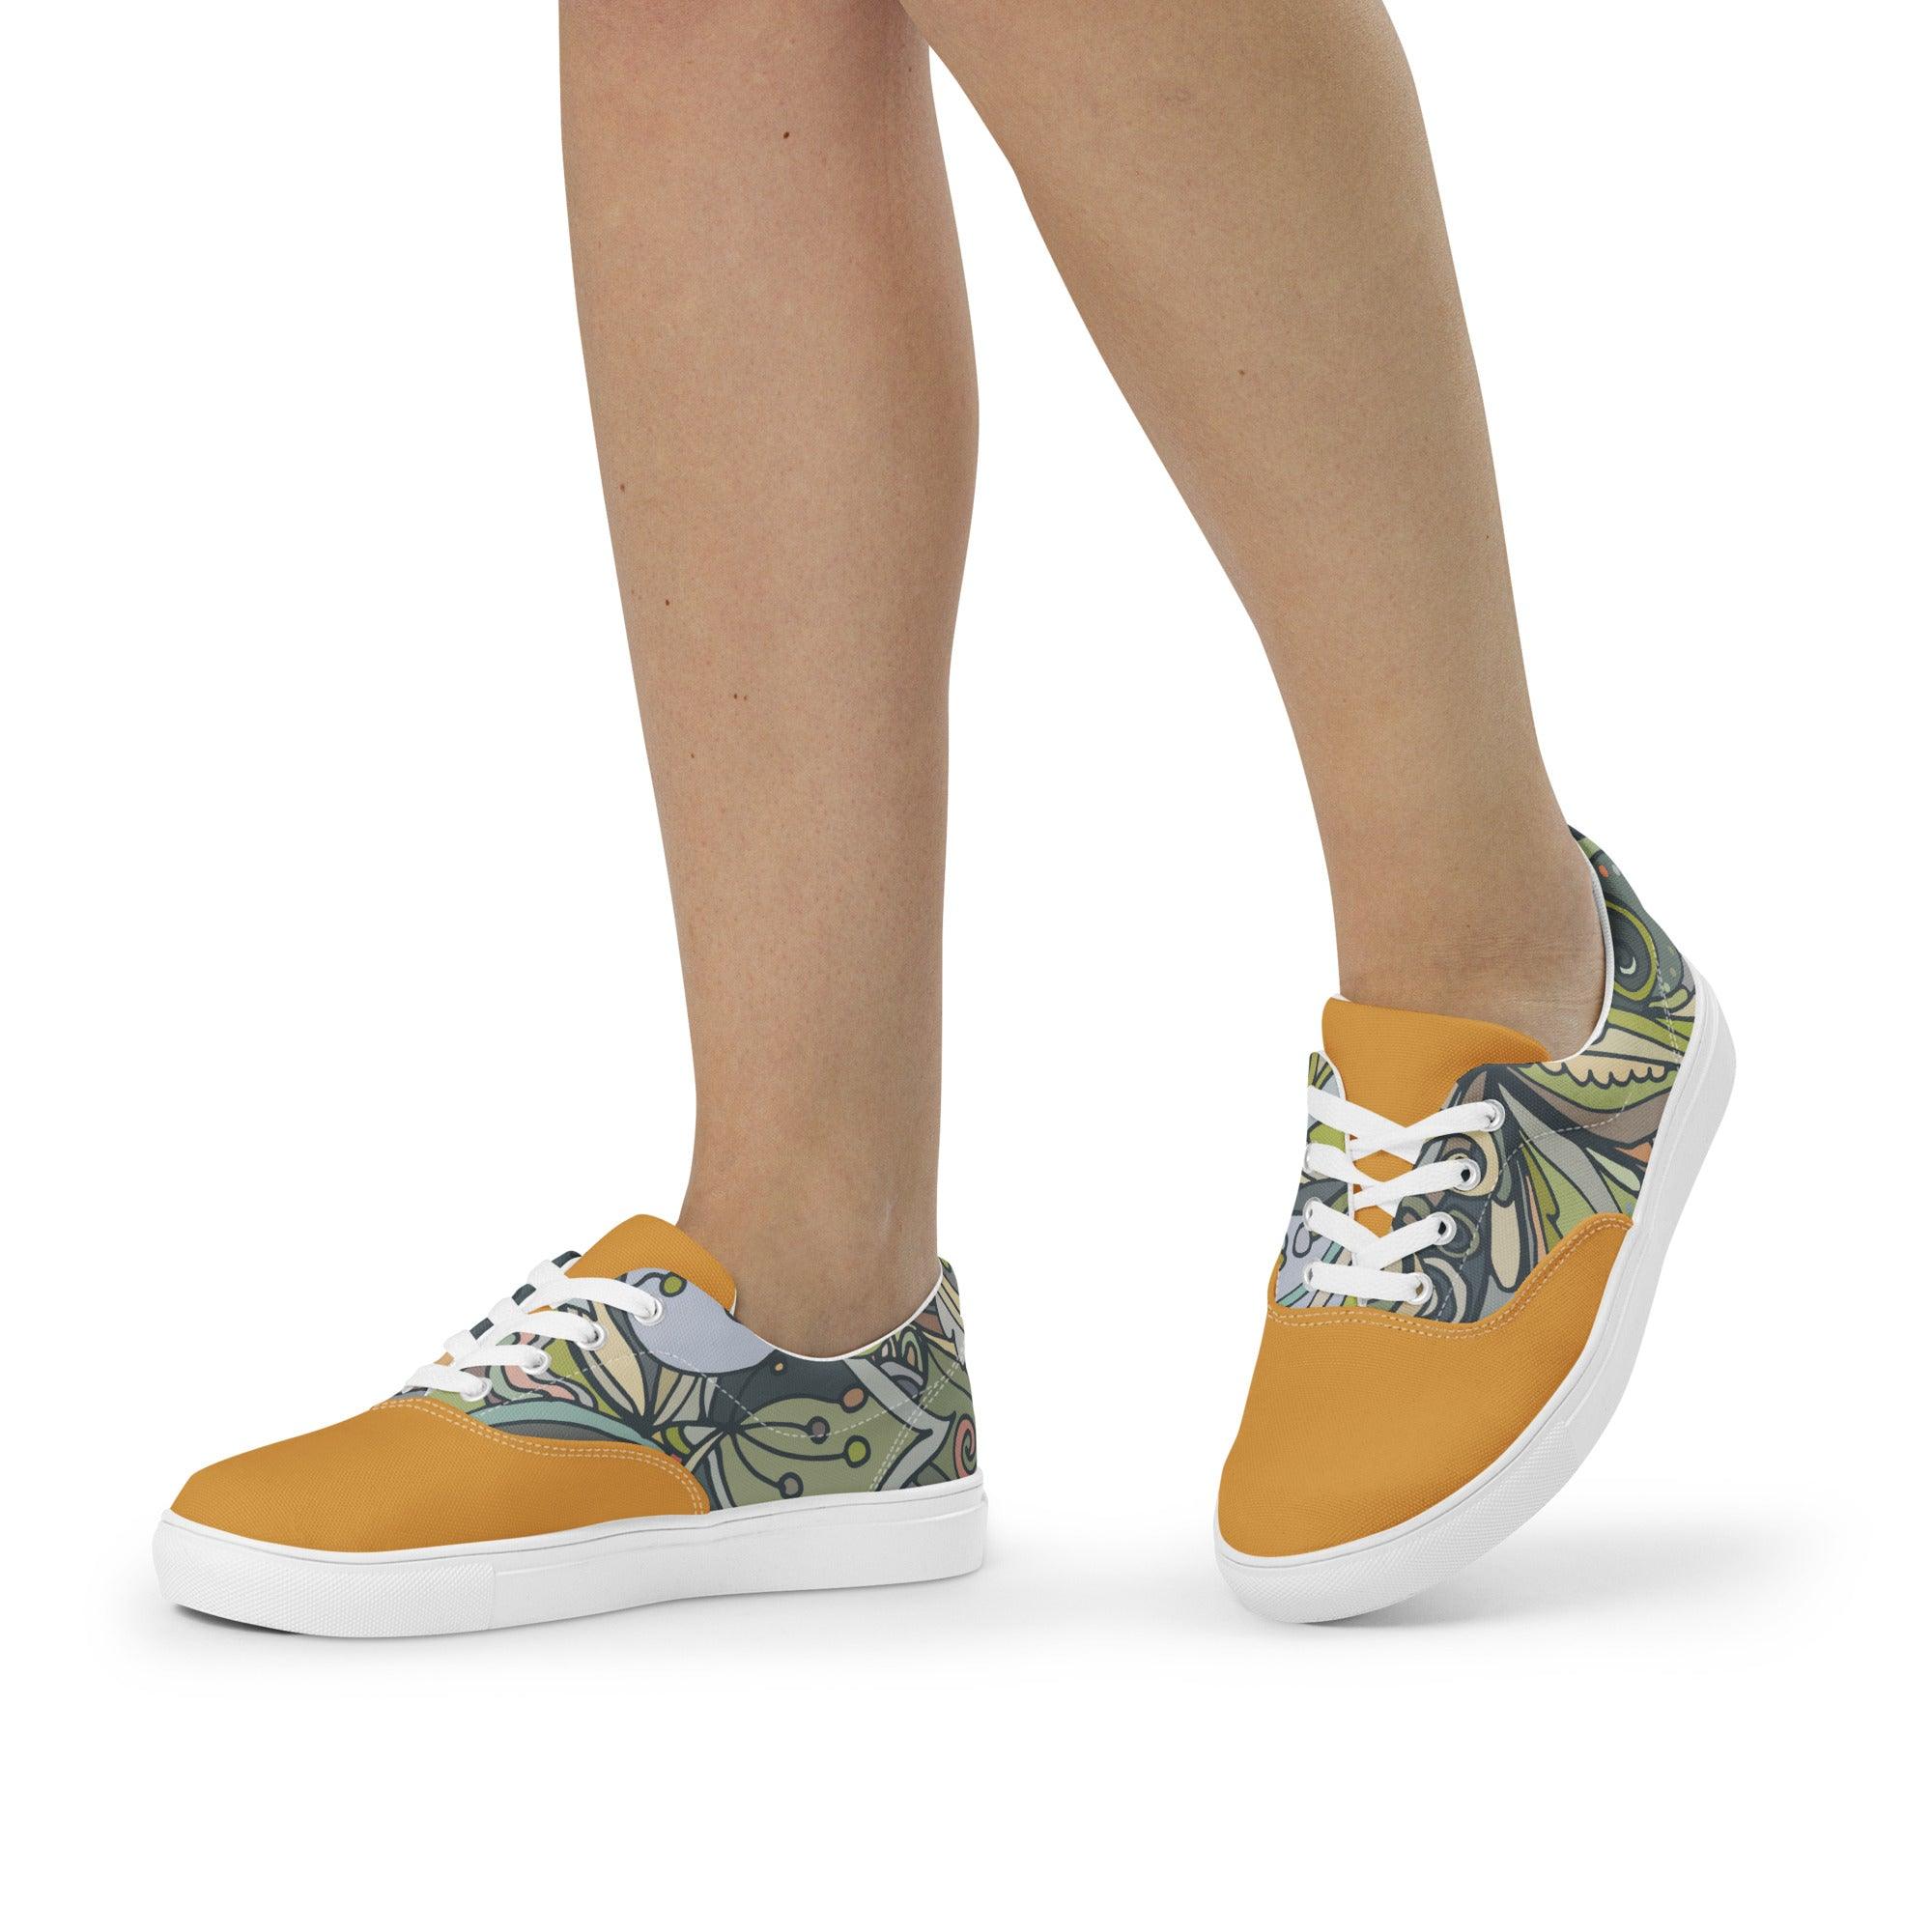 Jana Lace Up Women's Canvas Sneakers - Kaleidoscope Paisley Print Wild Funky Retro Swirls Bold Vibrant Fun Tie Shoes Pattern Mix Solid Yellow Blissfully Brand